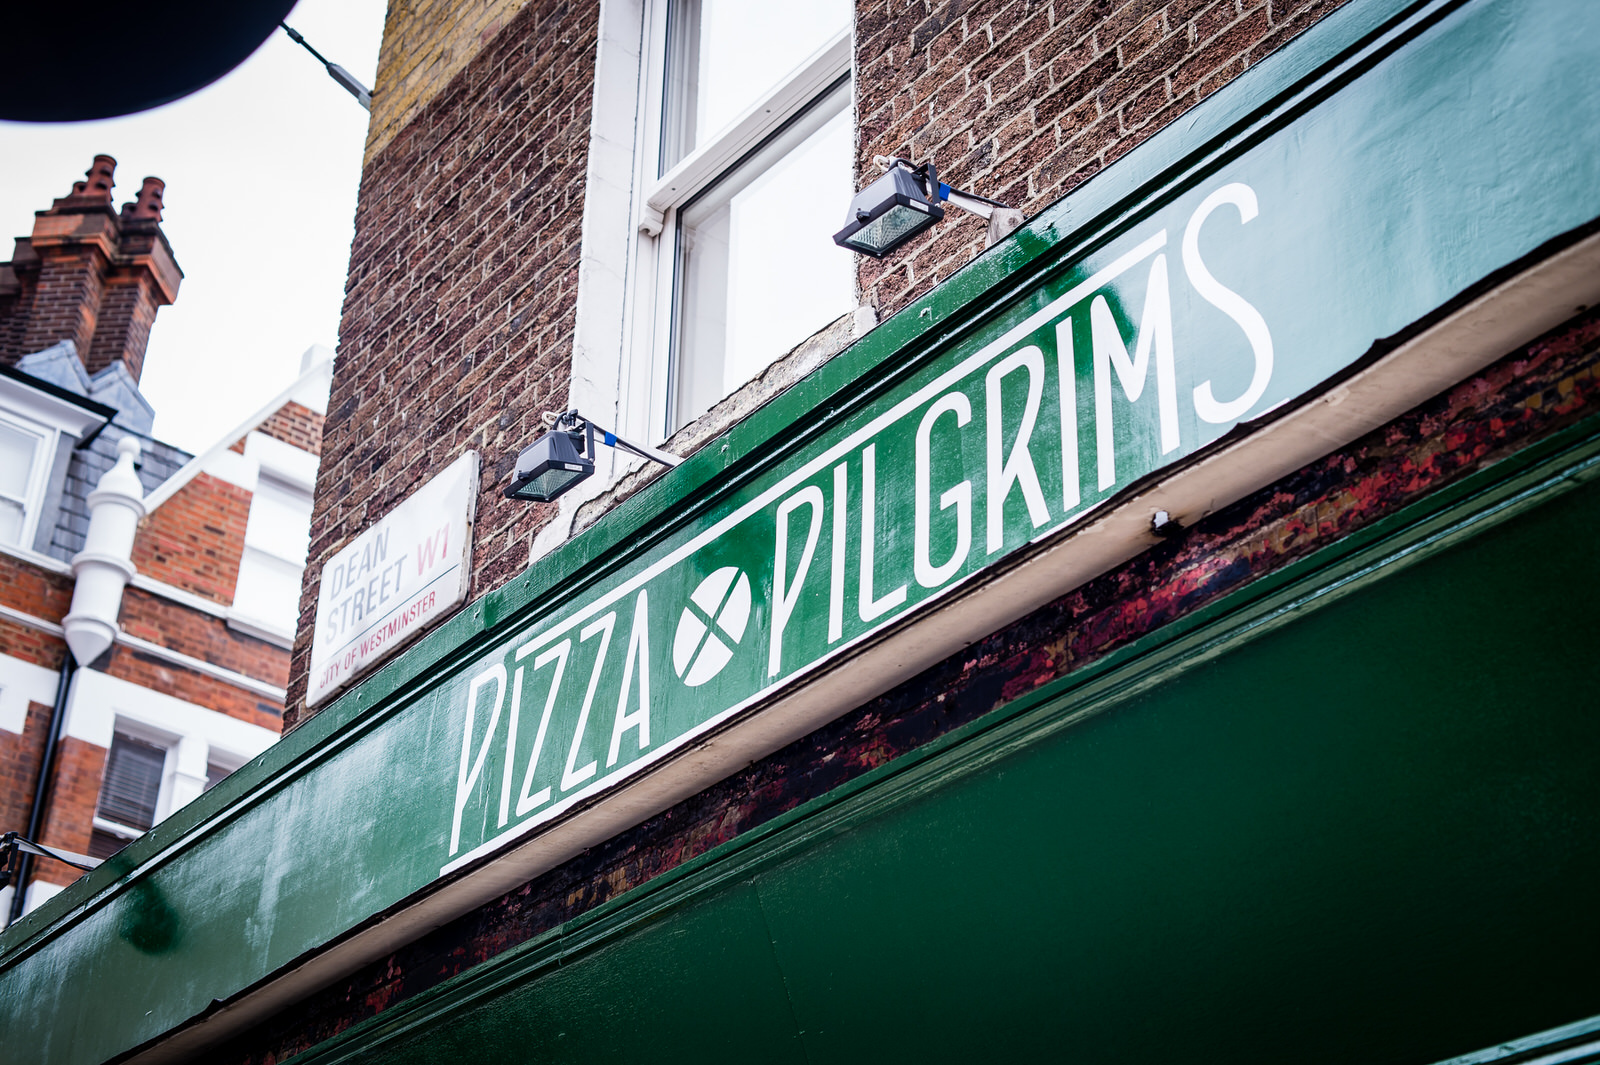 Pizza Pilgroms London